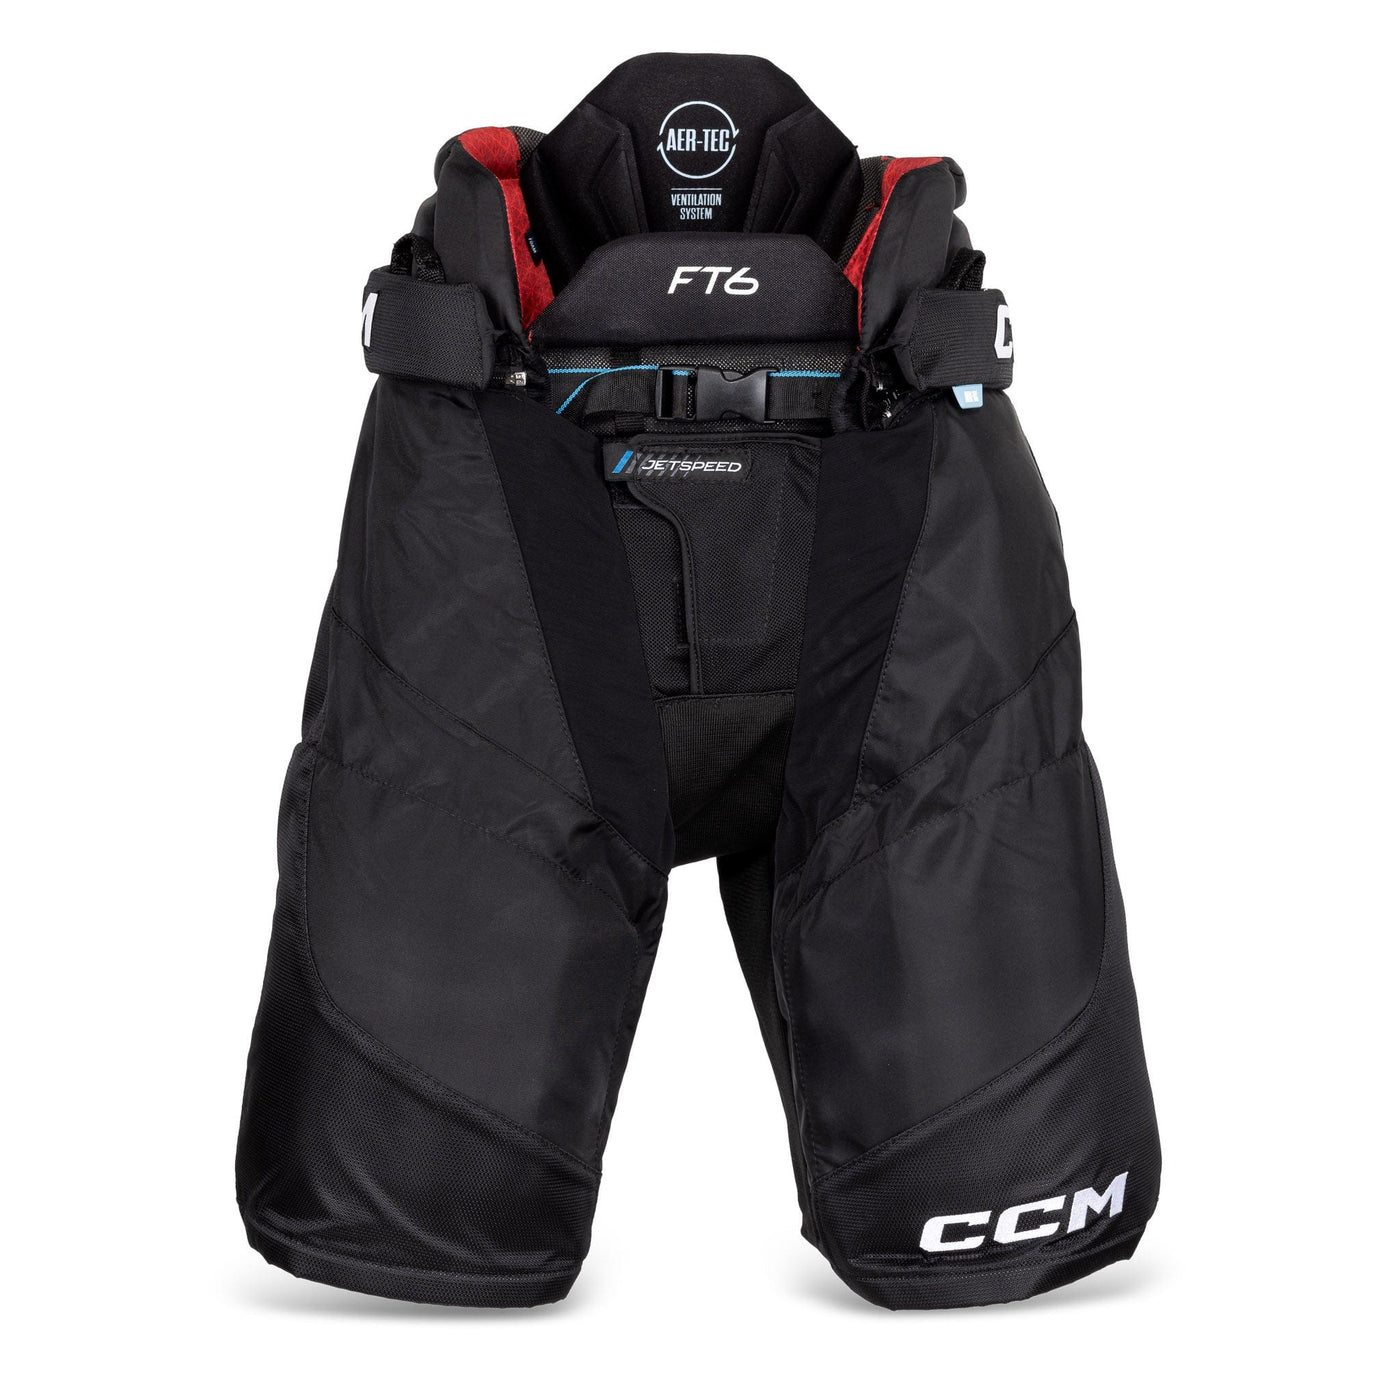 CCM Jetspeed FT6 Senior Hockey Pants - The Hockey Shop Source For Sports